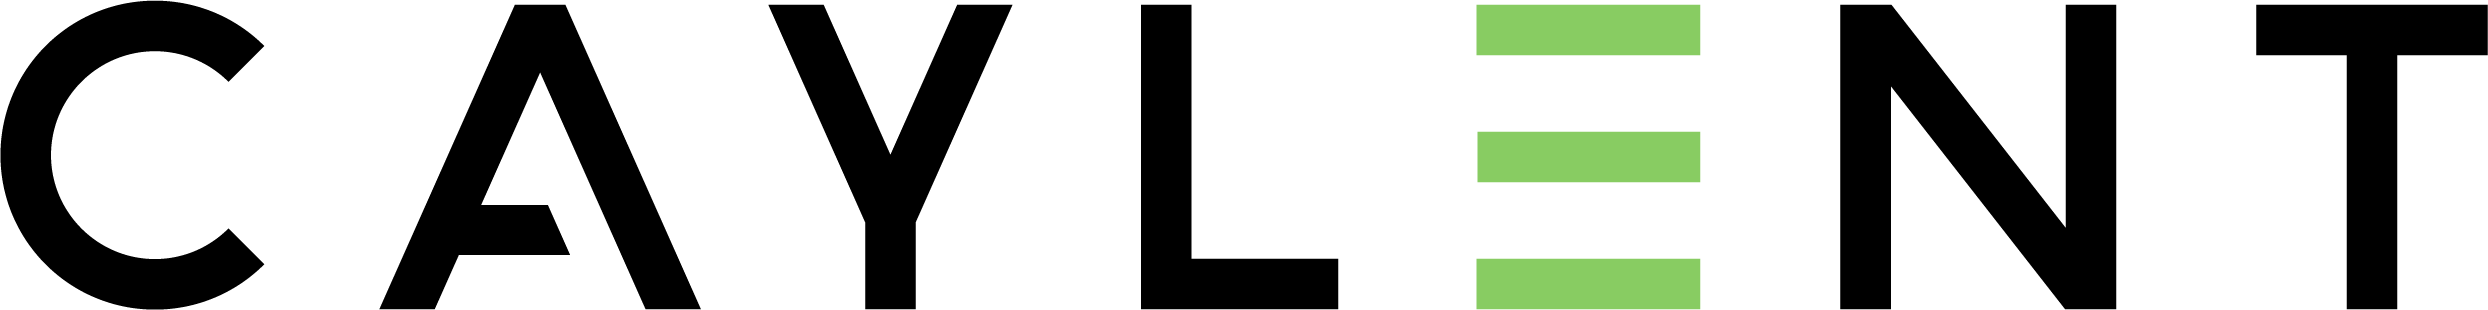 Caylent Logo Black